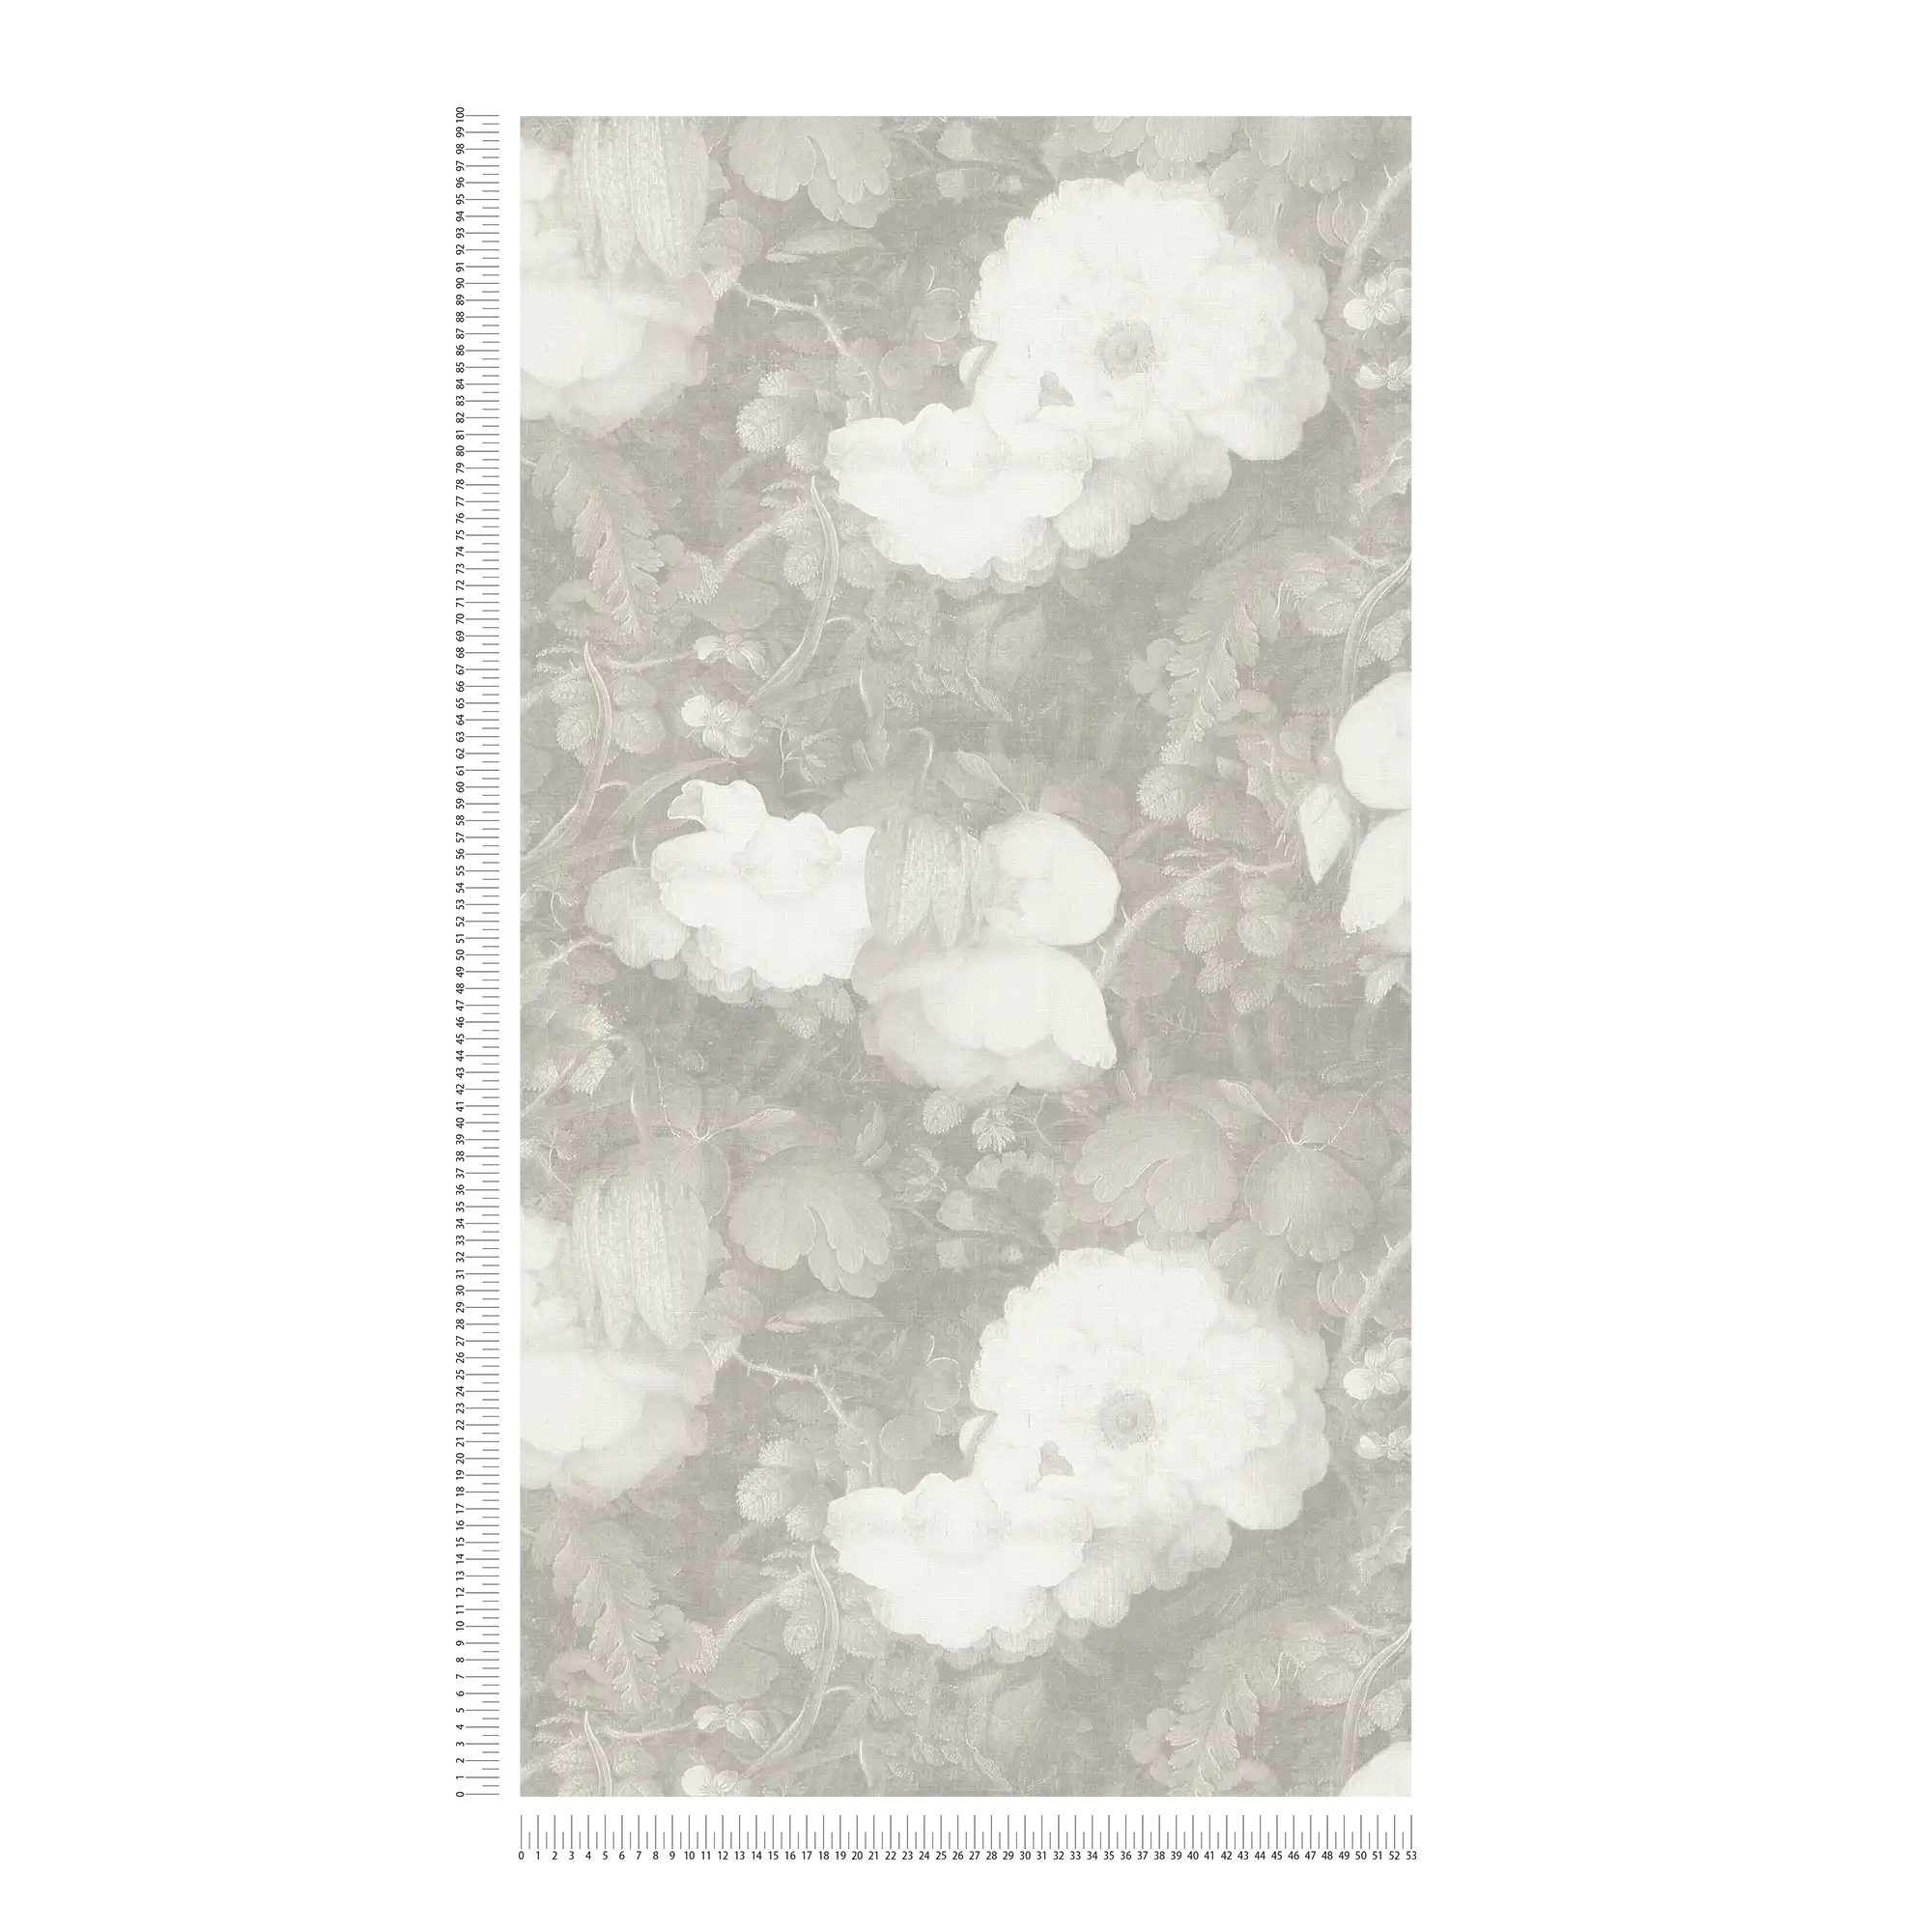             Blumentapete im Gemälde Stil, Leinwandoptik – Grau, Weiß
        